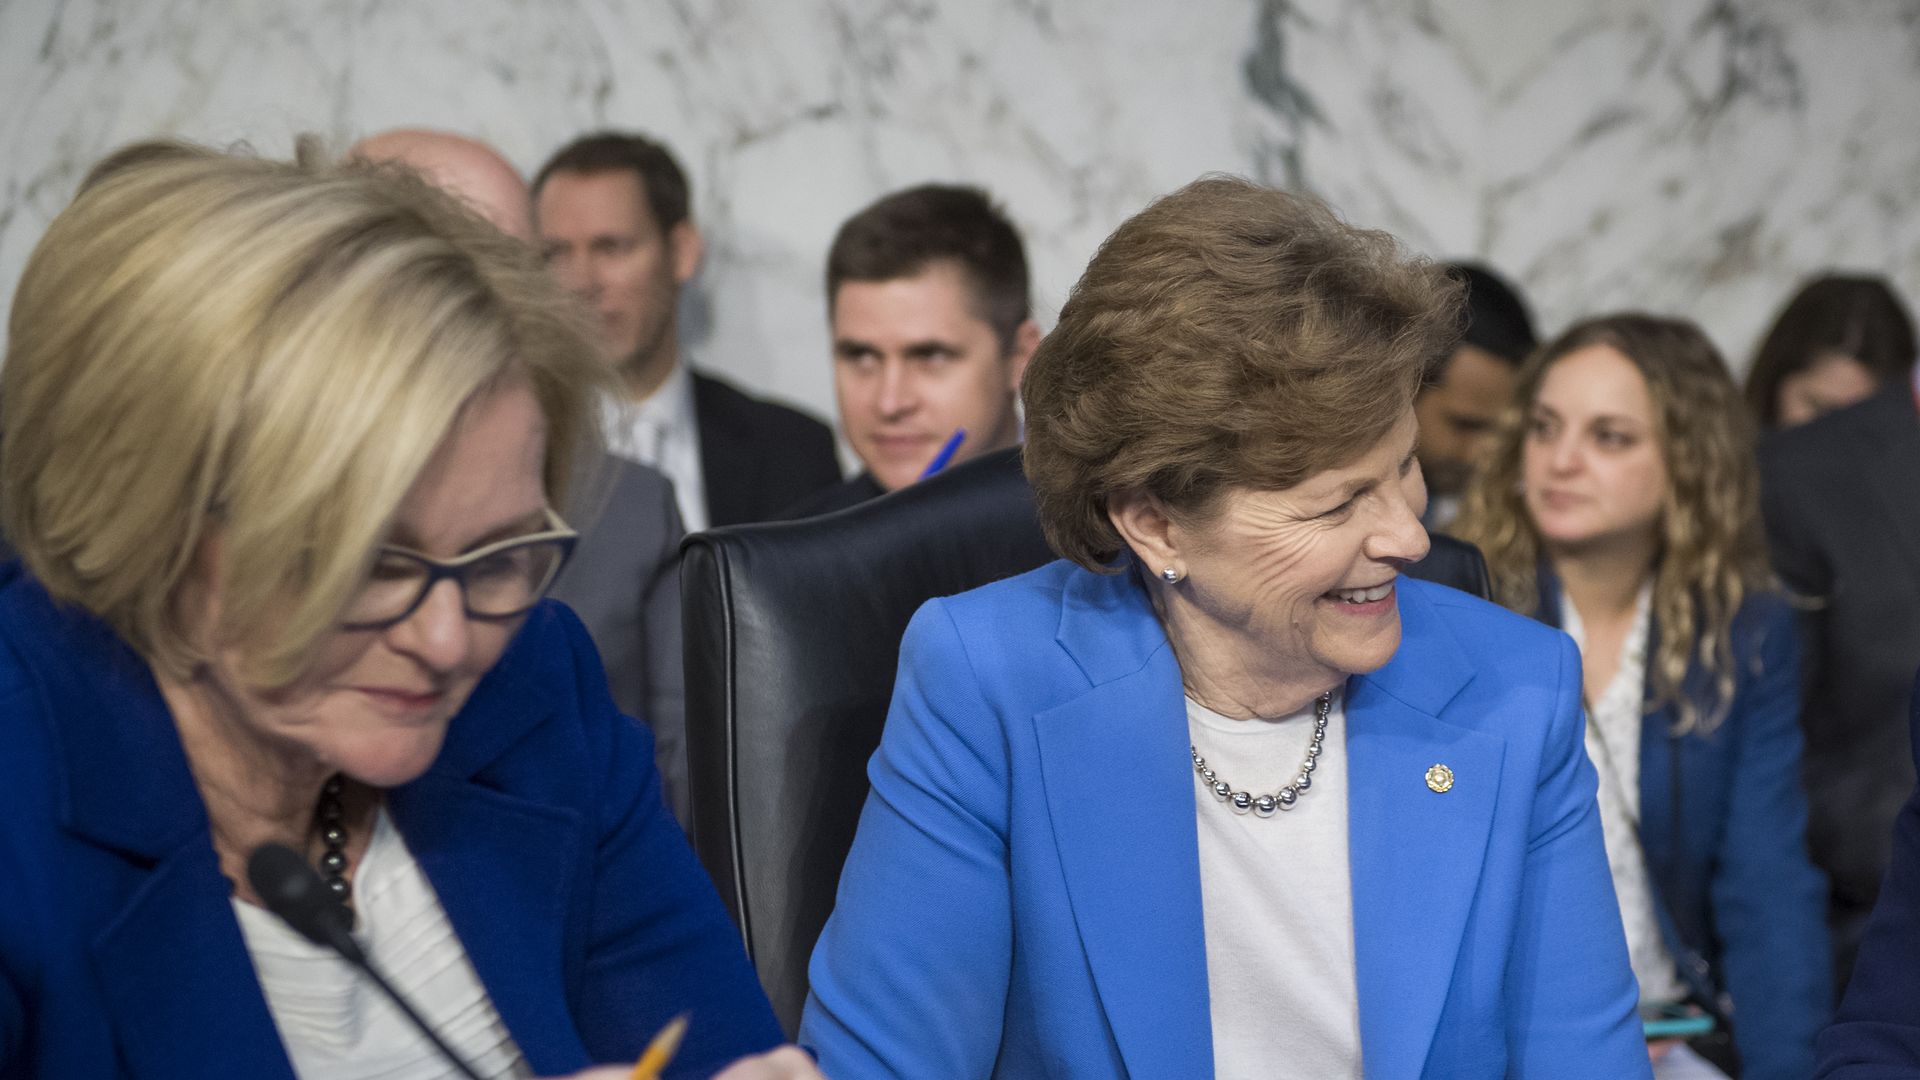 Senator McCaskill looks down at a desk and Senator Shaheen smiles.